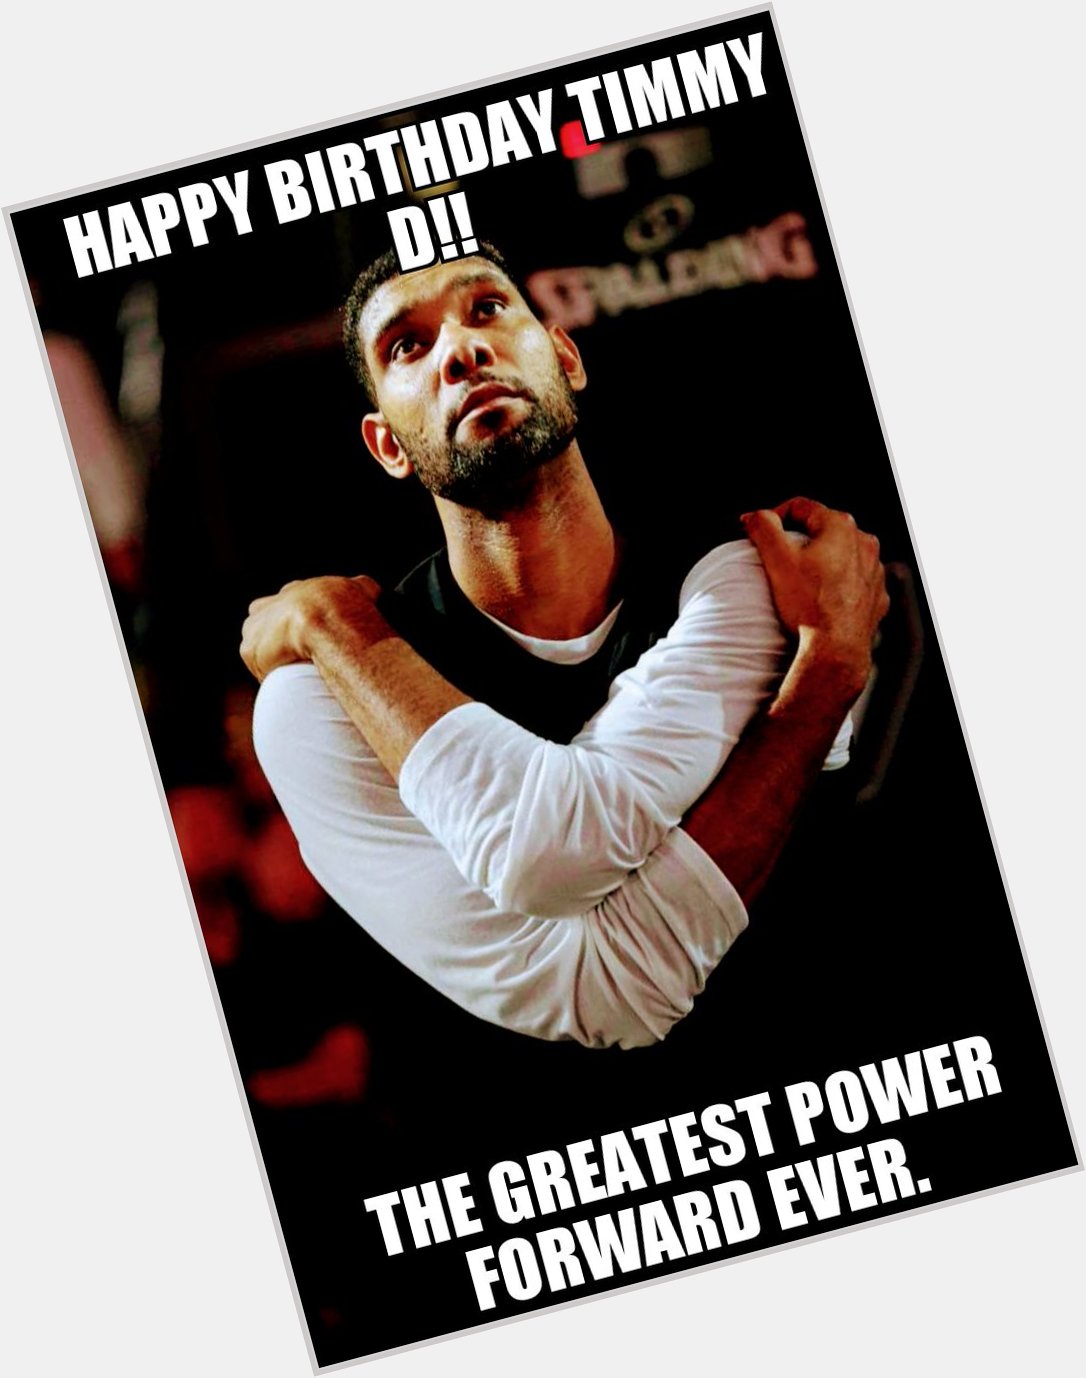 Happy birthday Tim Duncan the greatest power forward ever. 